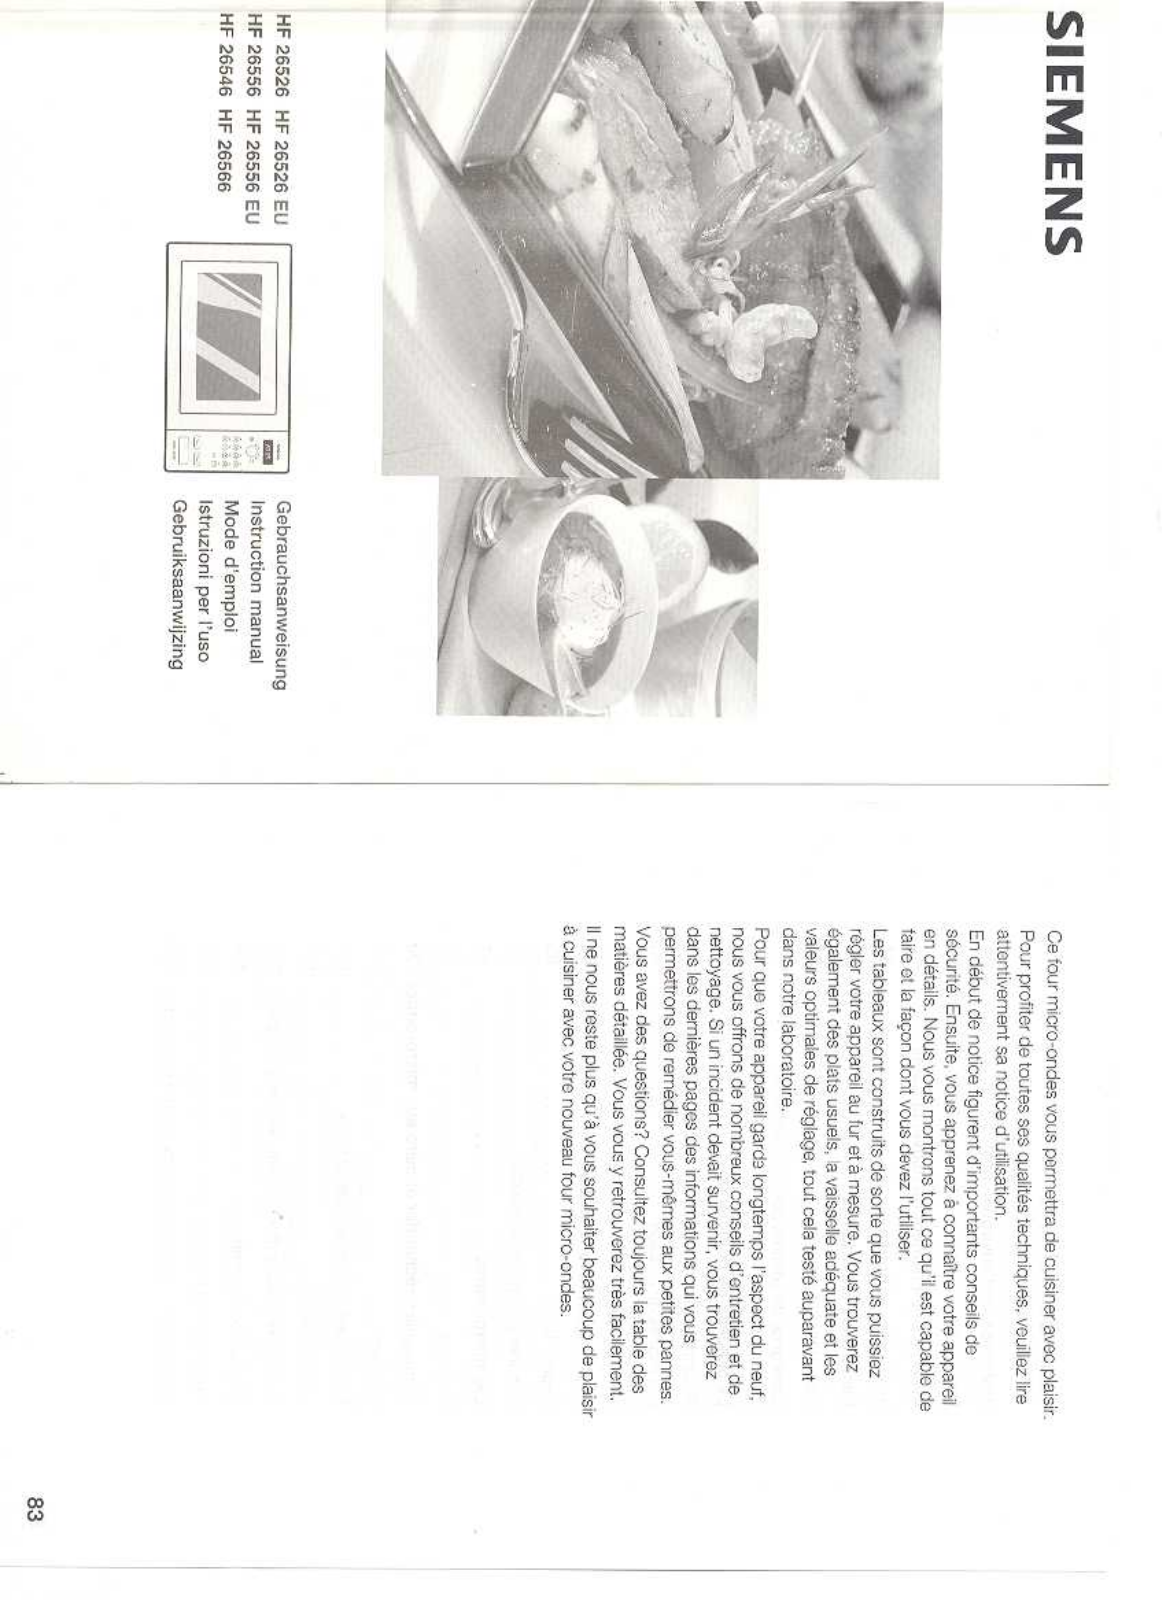 SIEMENS HF 26526 EU, HF 26566 User Manual